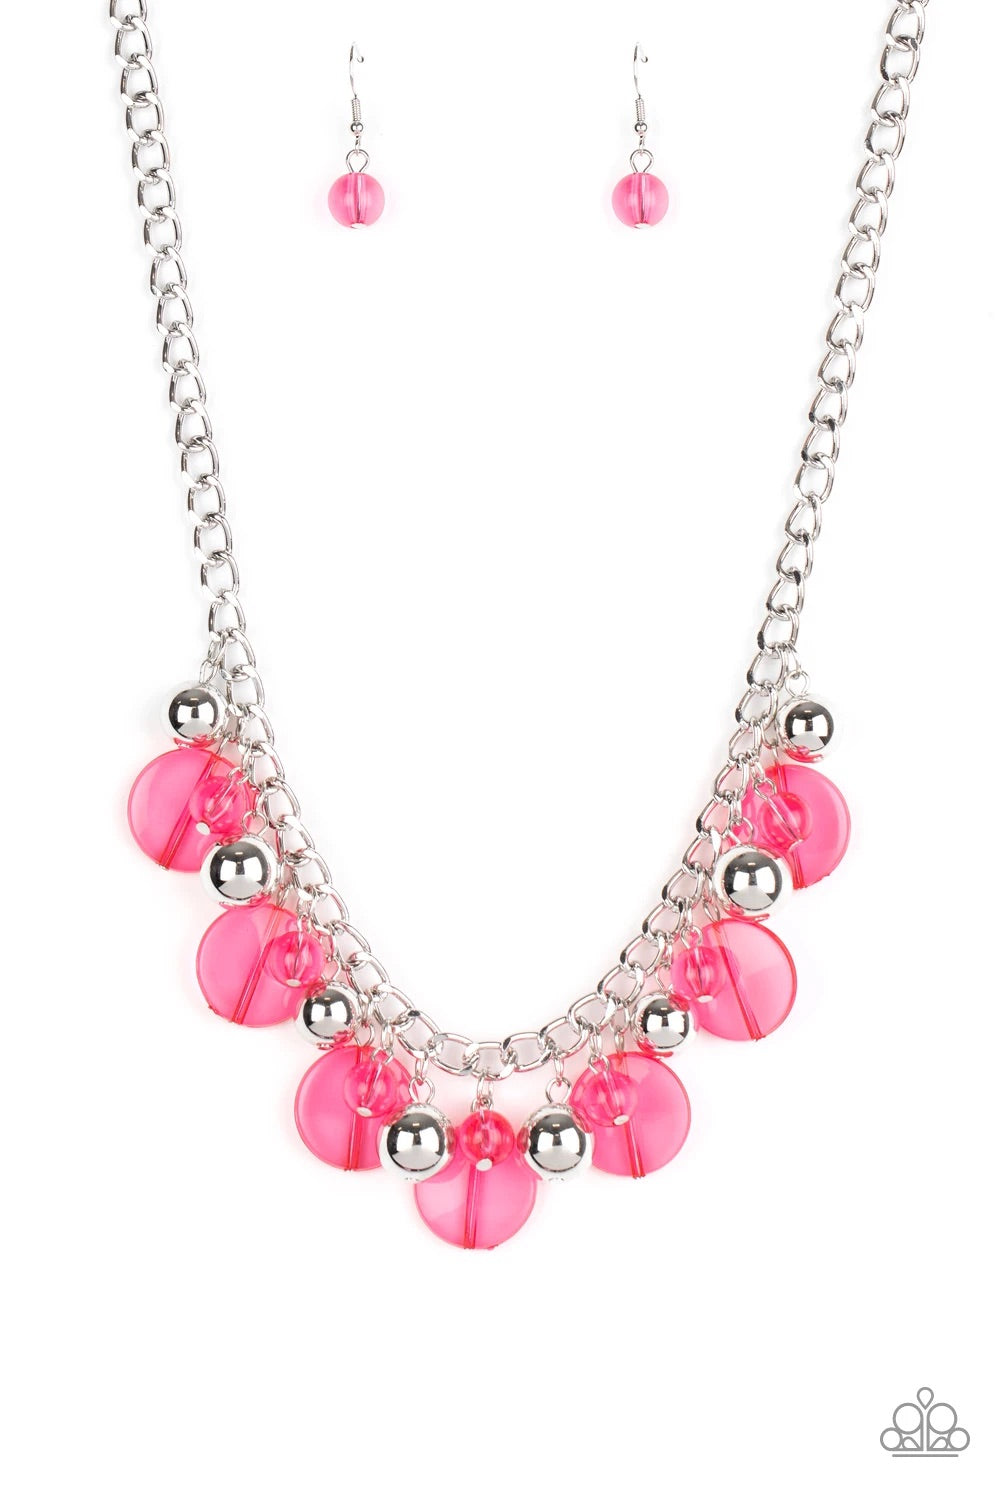 Gossip Glam - Pink Necklace freeshipping - JewLz4u Gemstone Gallery